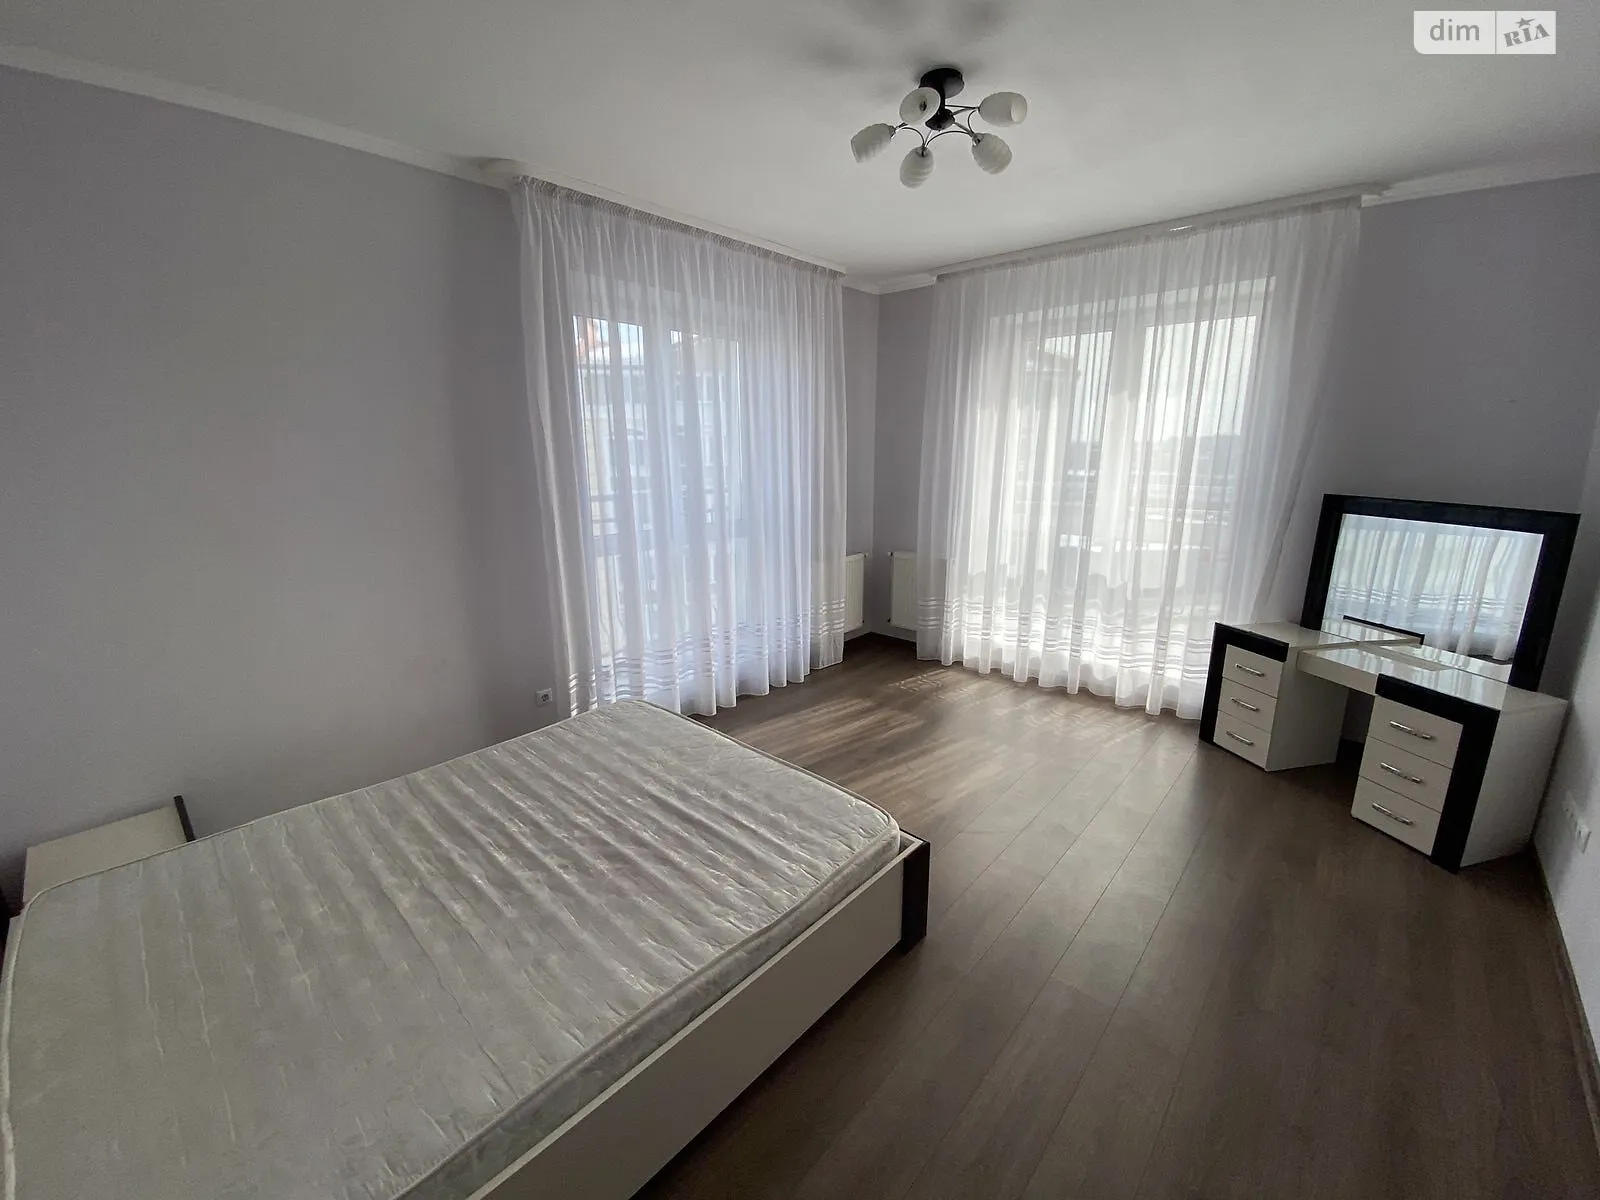 Сдается в аренду 2-комнатная квартира 63 кв. м в Ивано-Франковске, цена: 12500 грн